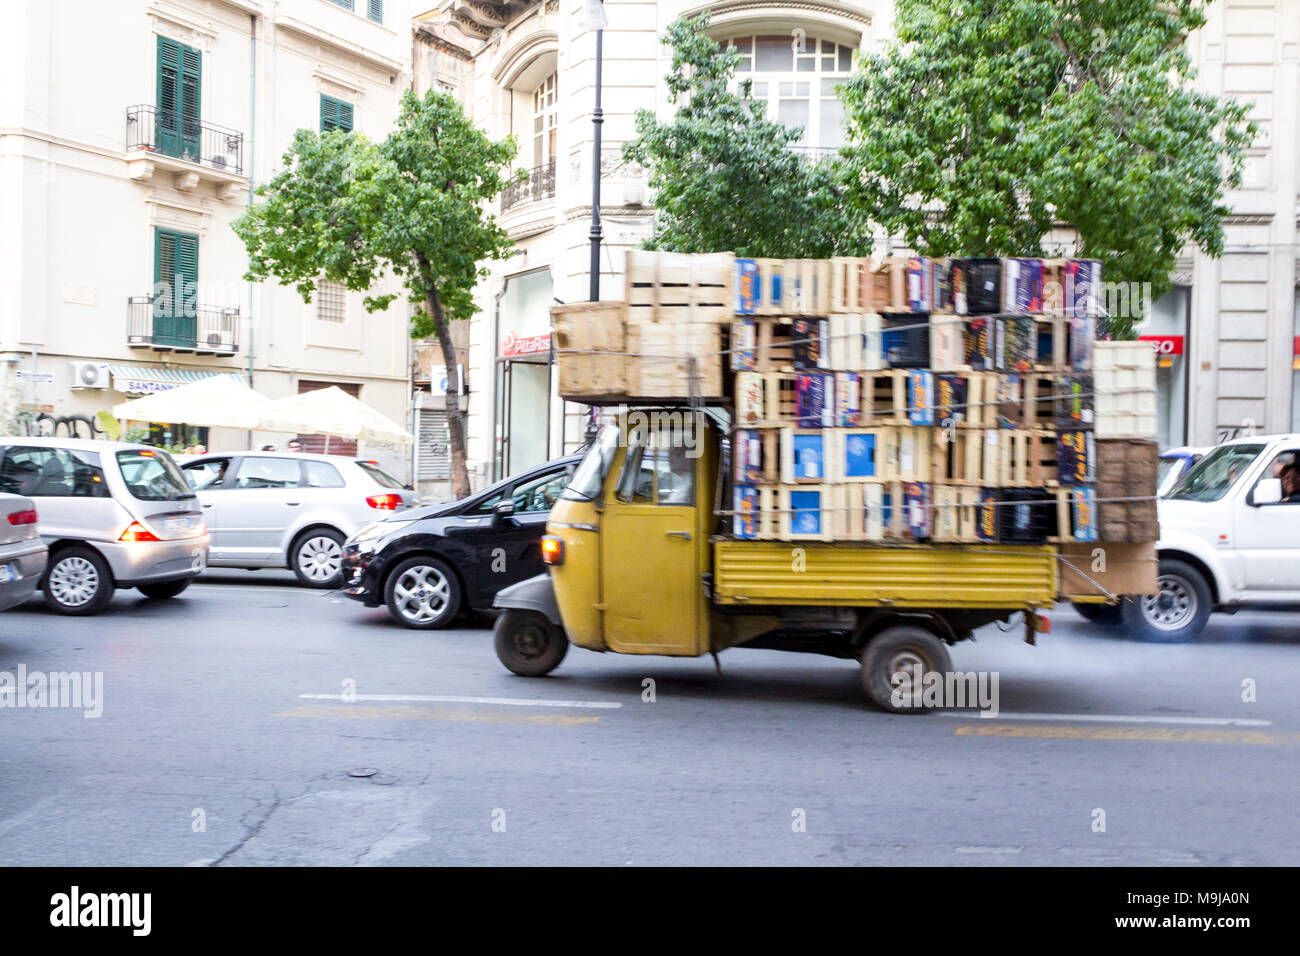 Three-wheeled vehicle loaded with fruit crates. Palermo, Sicily. Italy Stock Photo